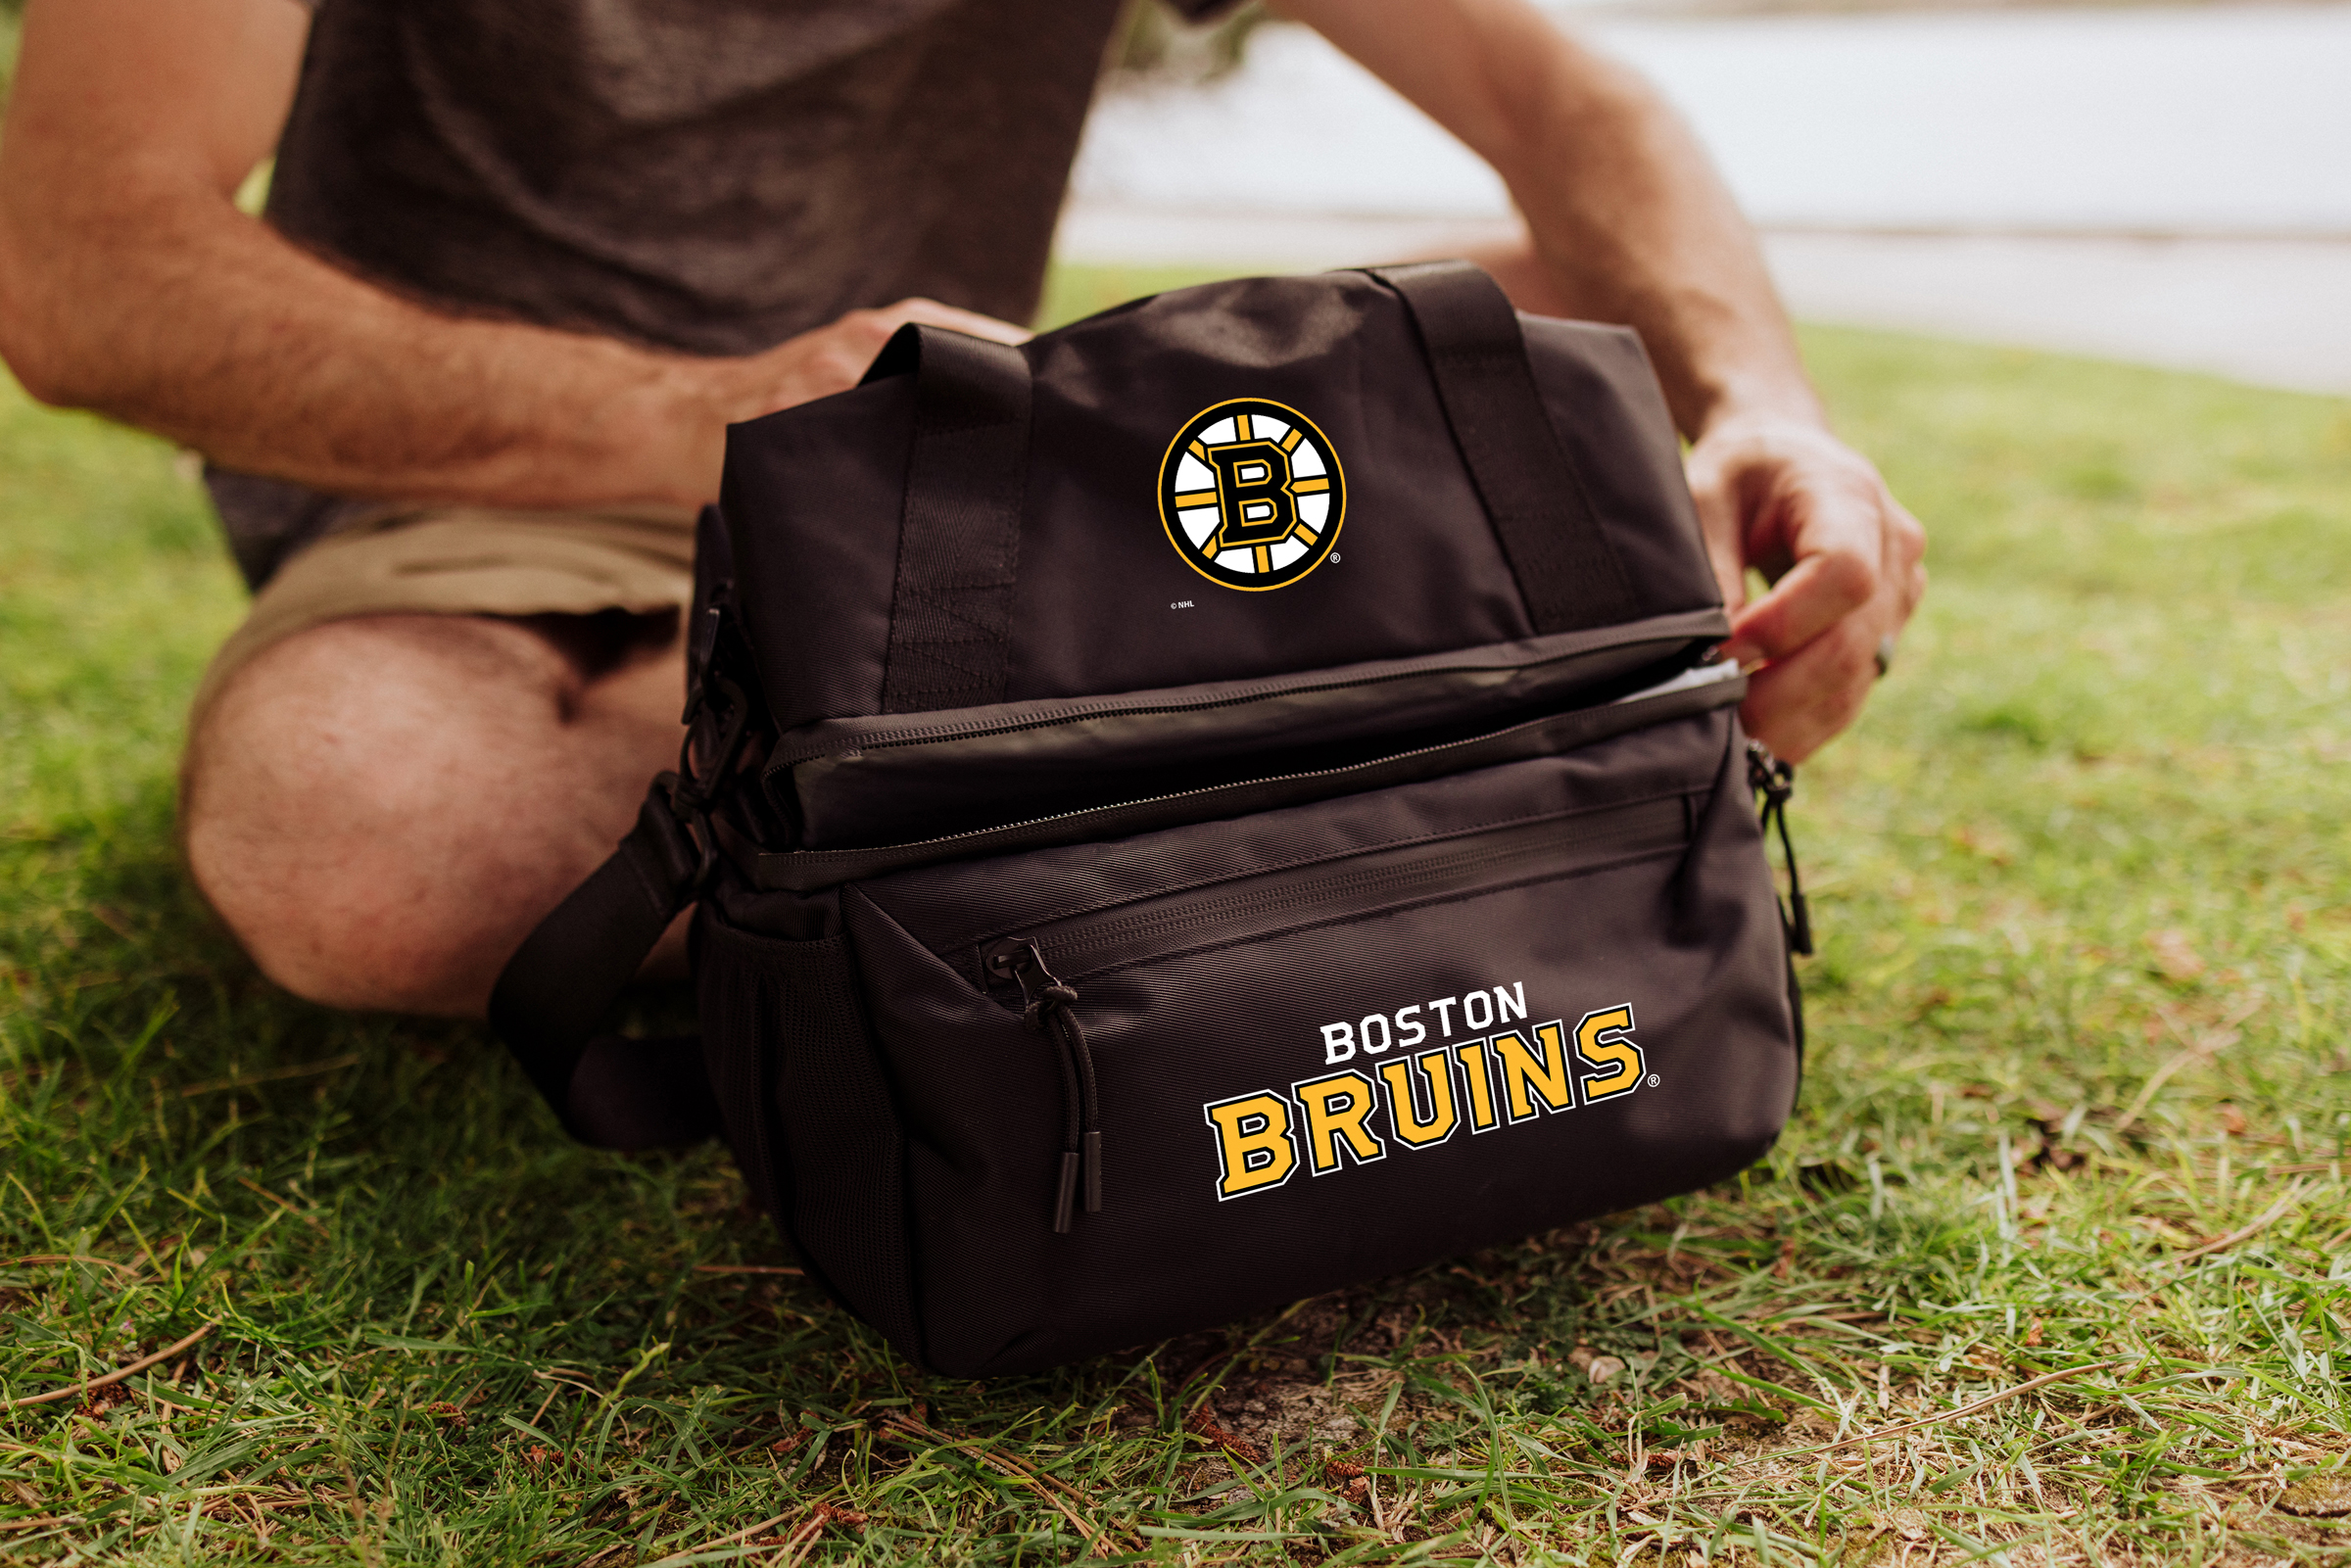 Boston Bruins - Tarana Lunch Bag Cooler with Utensils